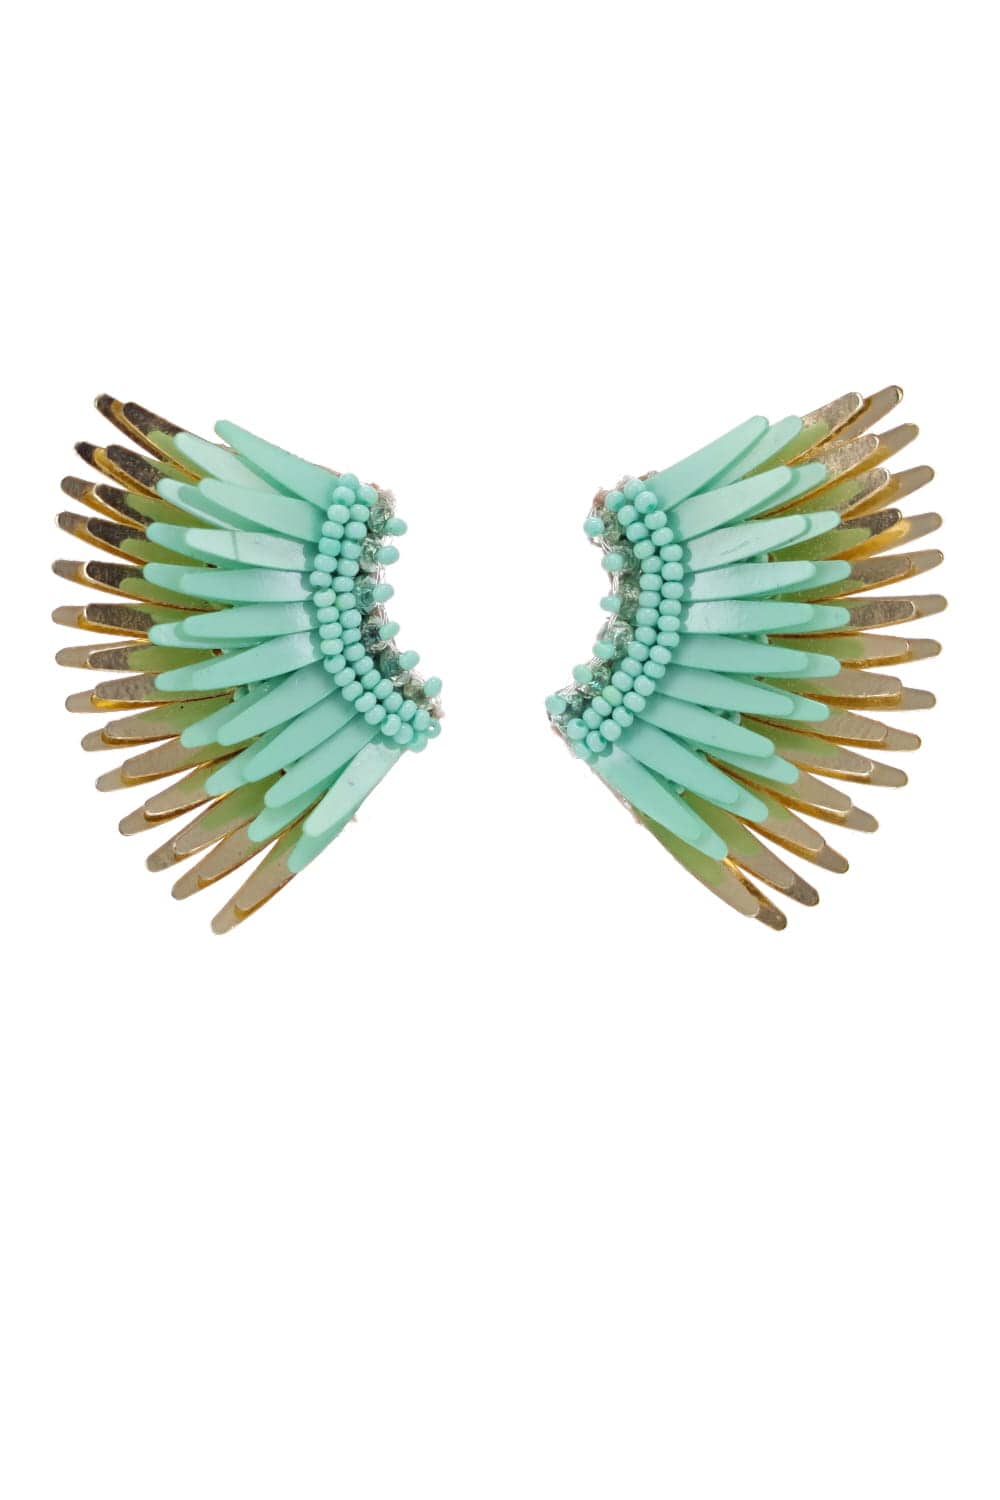 Mignonne Gavigan Mini Madeline Royal Turquoise Earrings